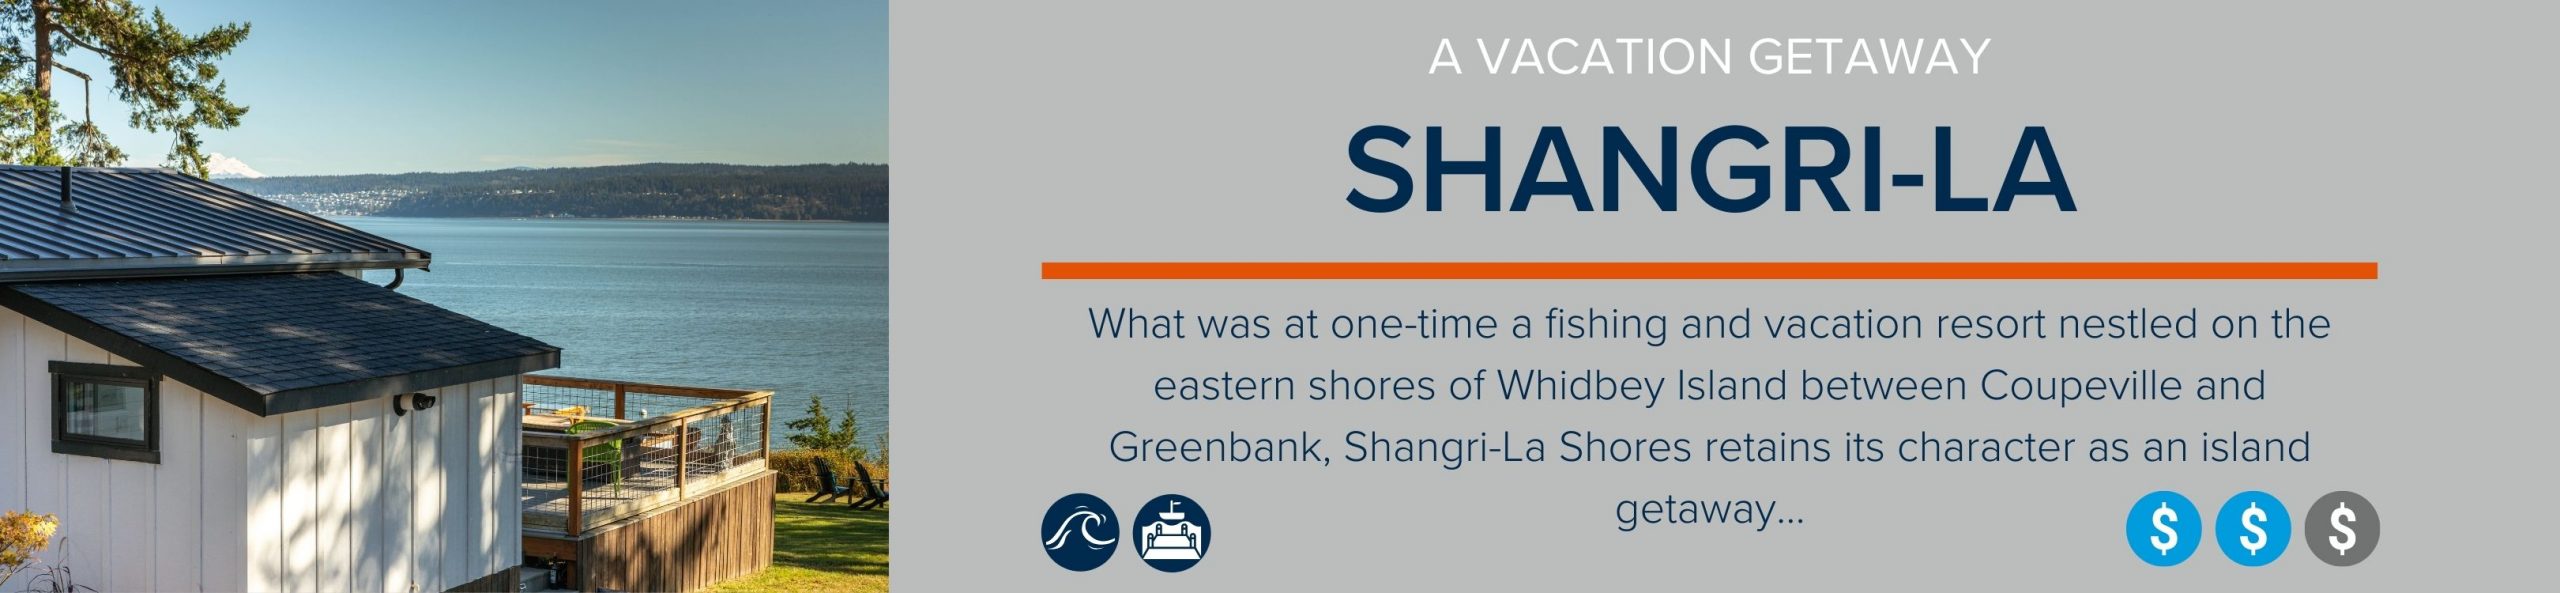 Shangri-La, Whidbey Island, Neighborhood, Coupeville, Greenbank, Windermere Real estate South Whidbey